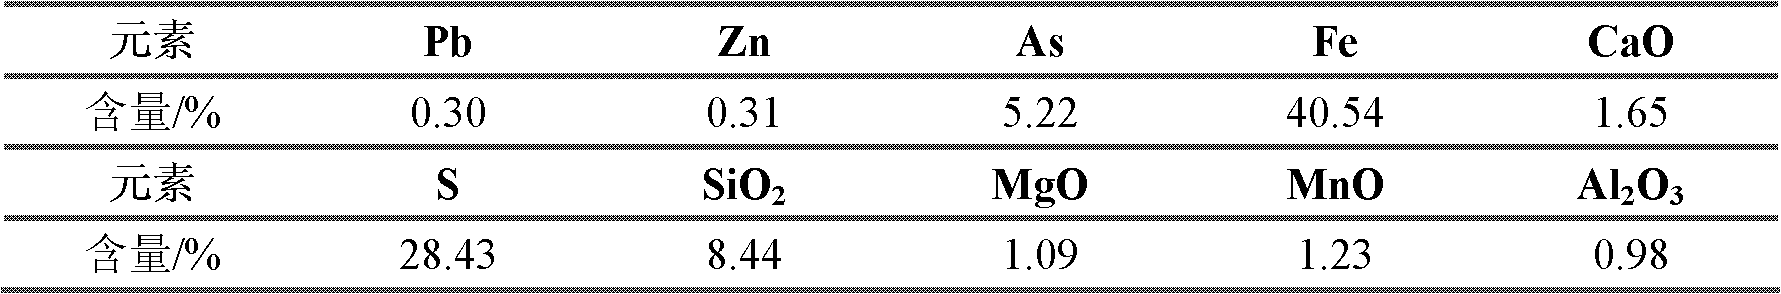 Floatation separation method for pyrites from arsenopyrites